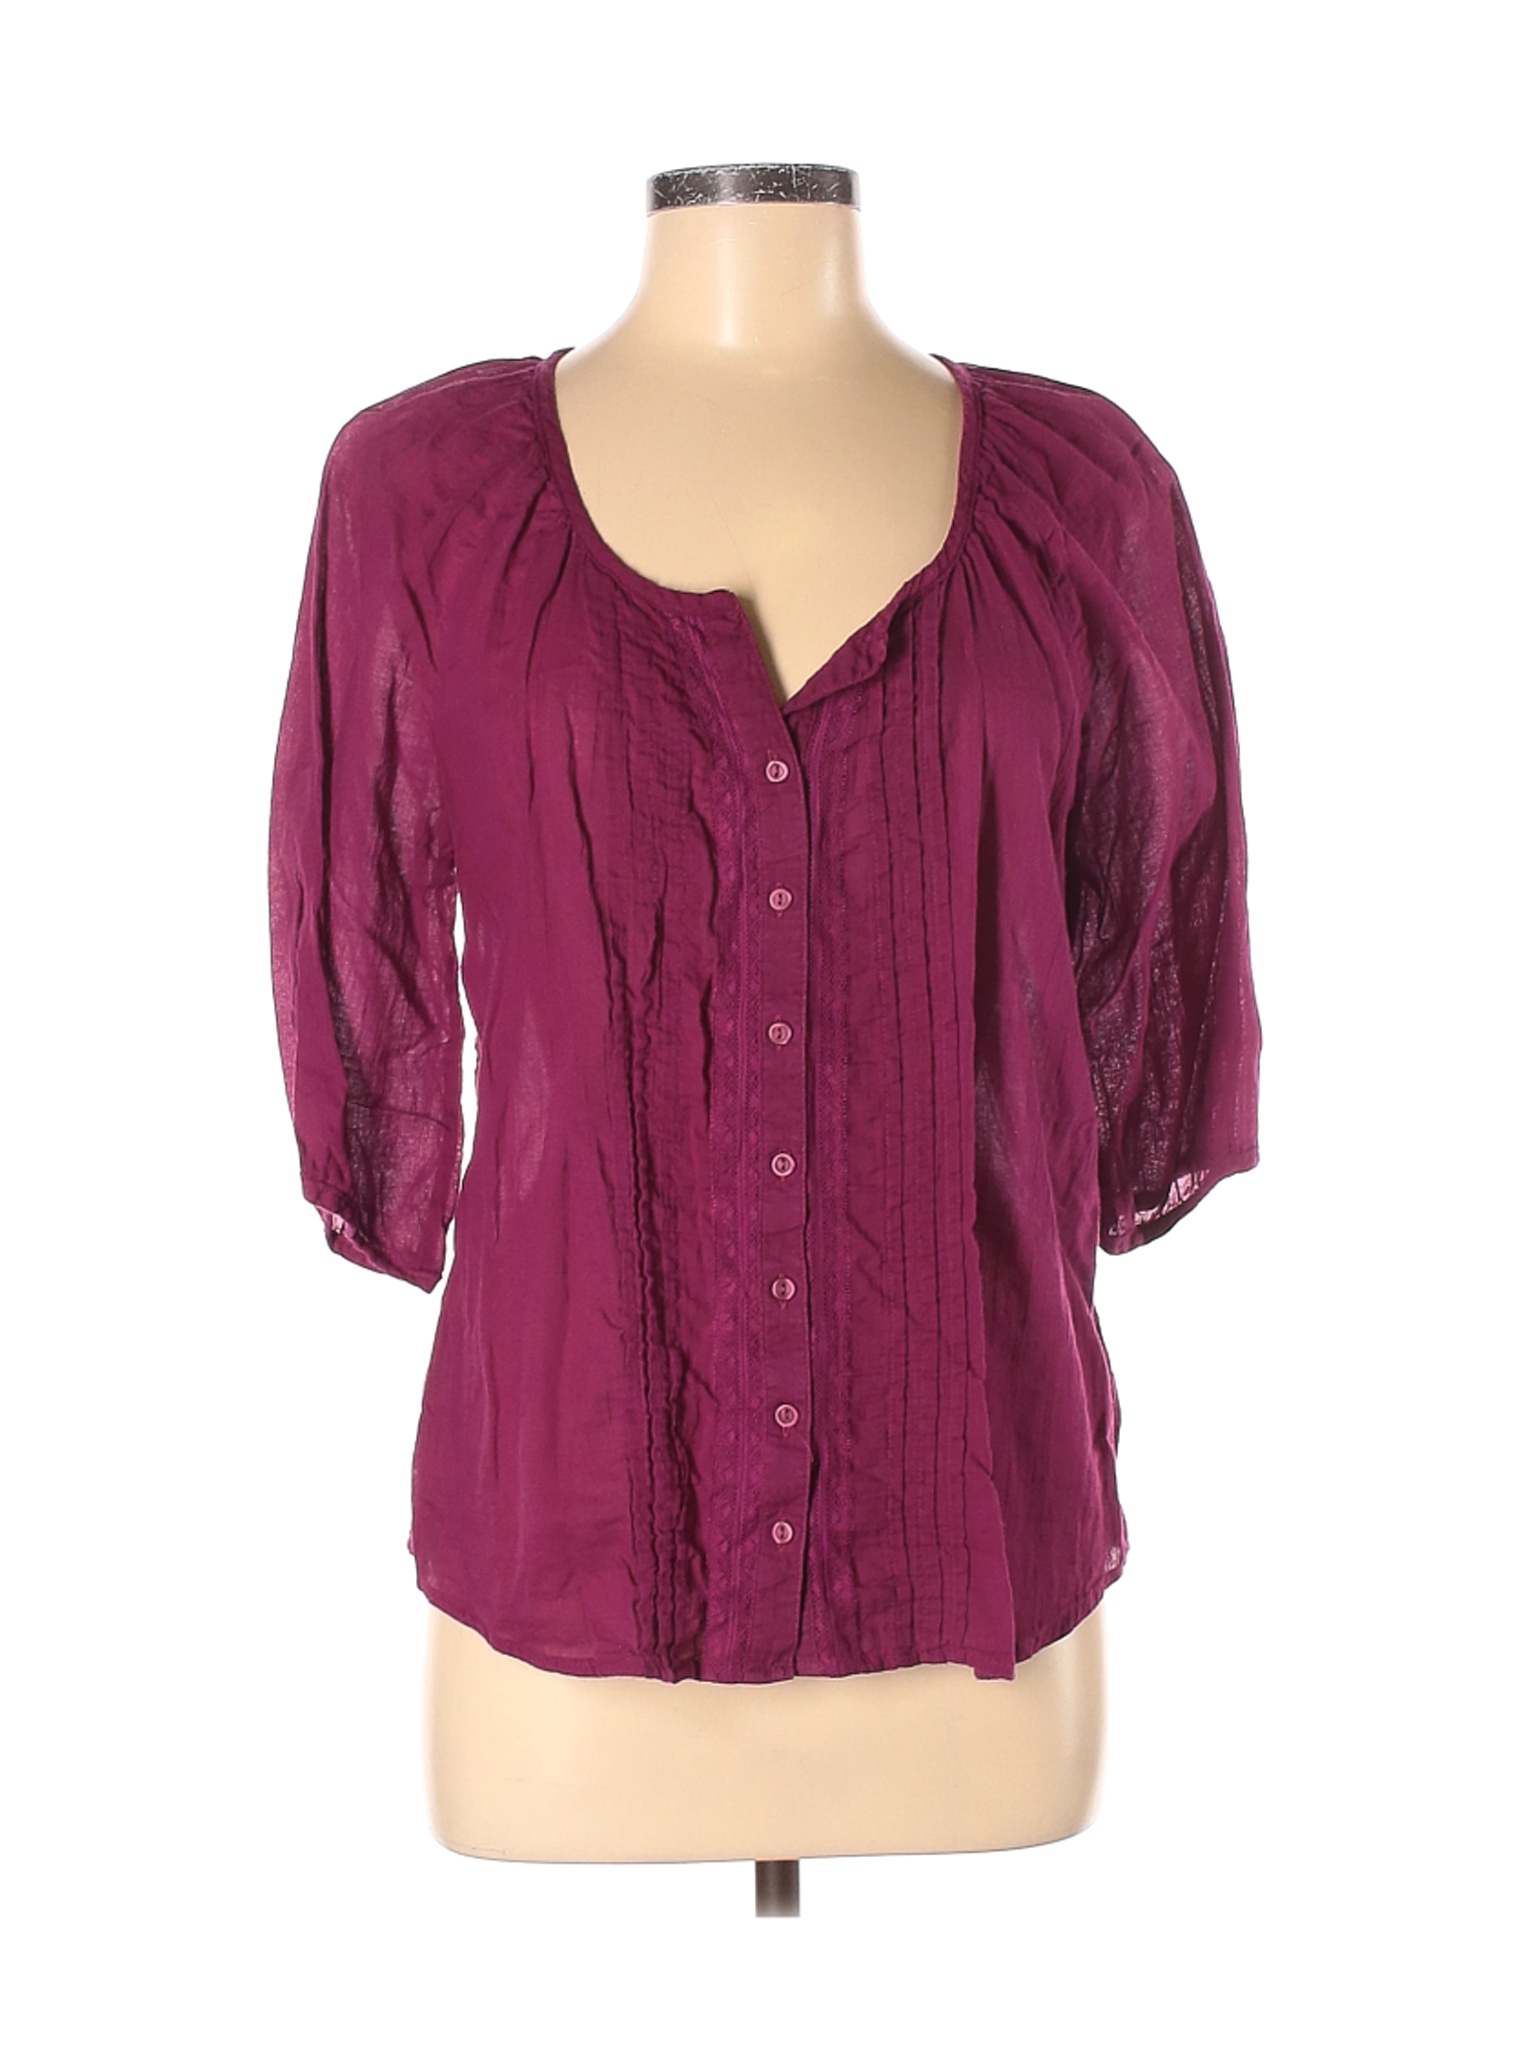 SONOMA life + style Women Pink 3/4 Sleeve Button-Down Shirt M | eBay